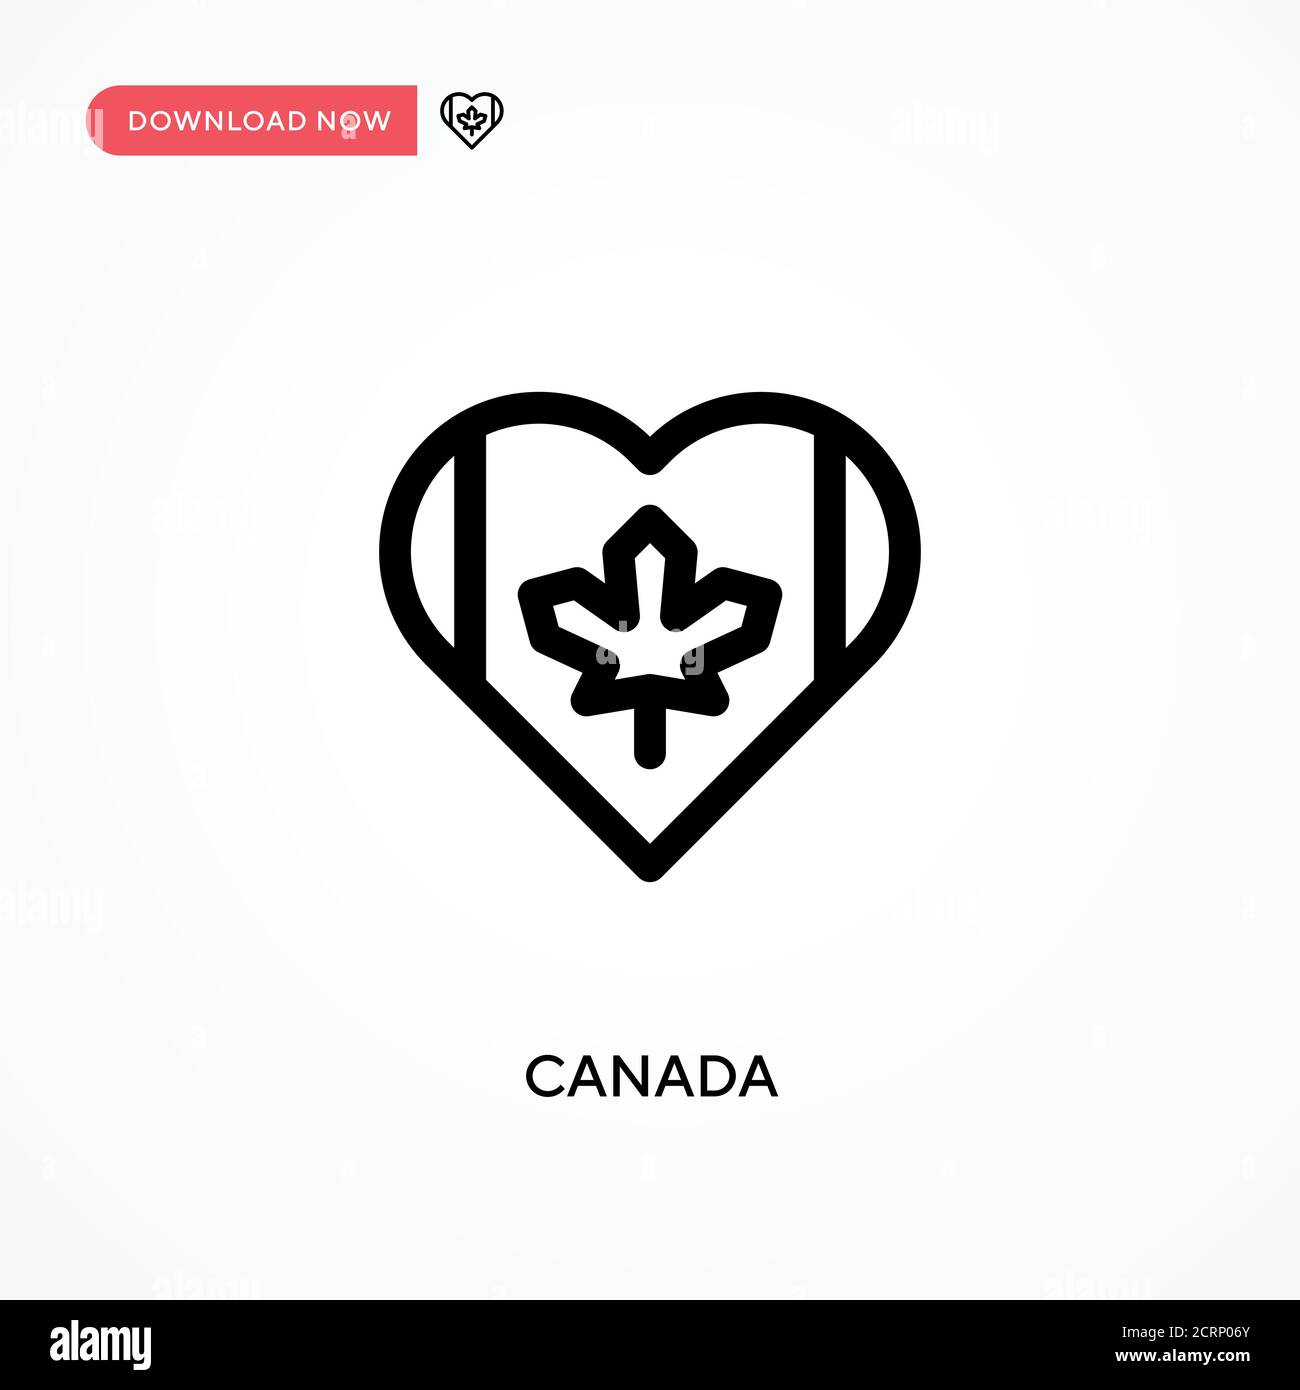 Einfaches Vektorsymbol Kanada. Moderne, einfache flache Vektor-Illustration für Website oder mobile App Stock Vektor